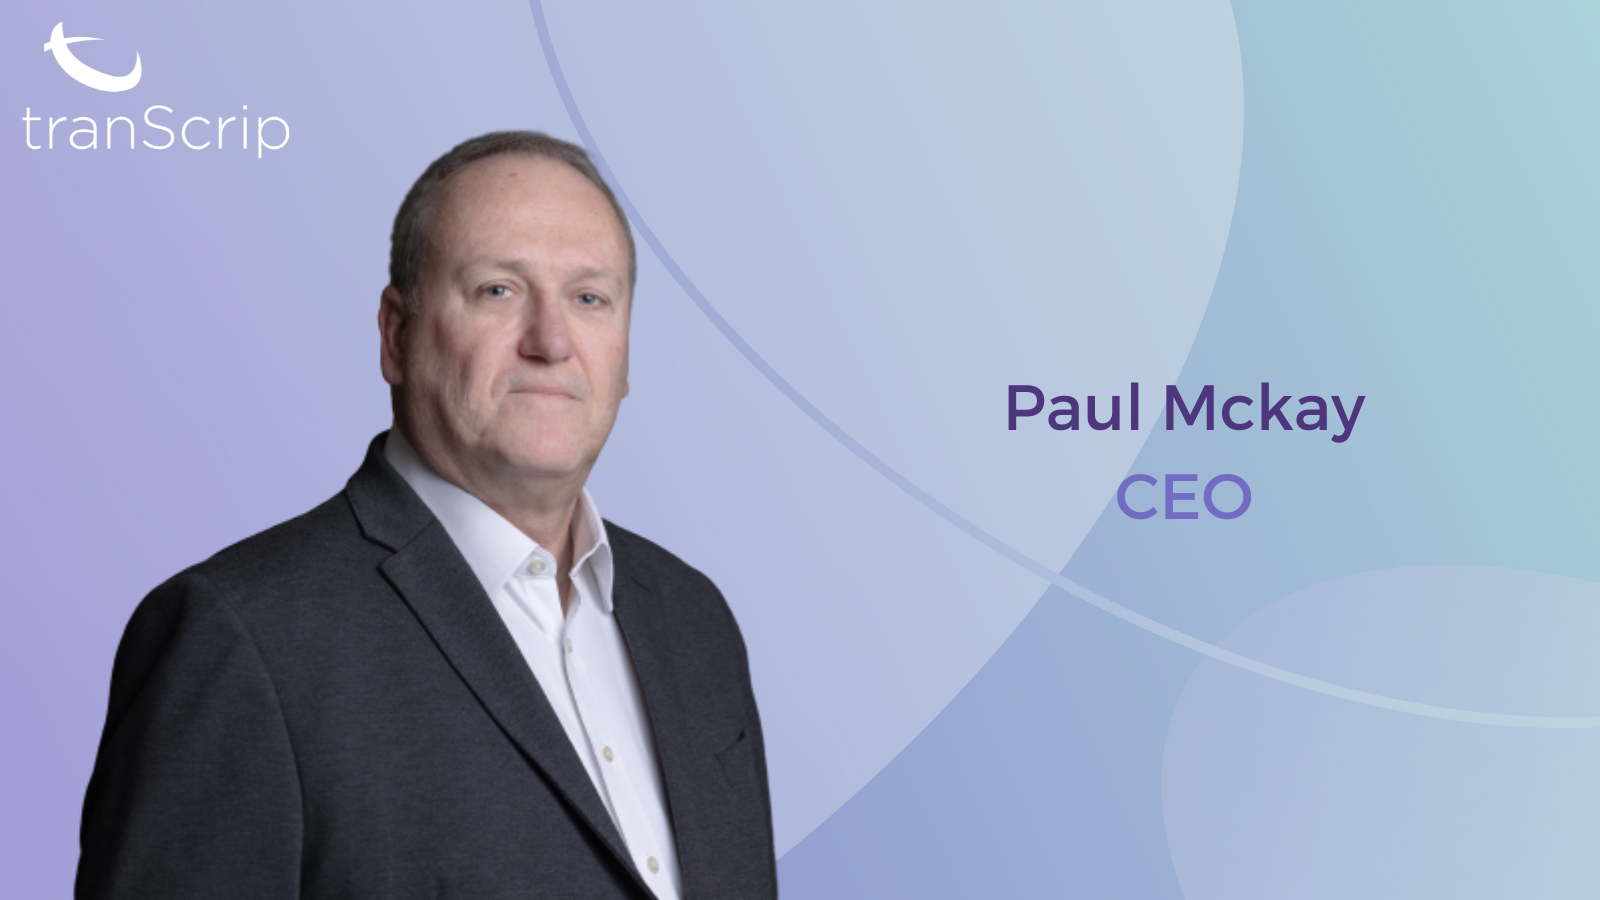 Paul Mckay announced as CEO for tranScrip